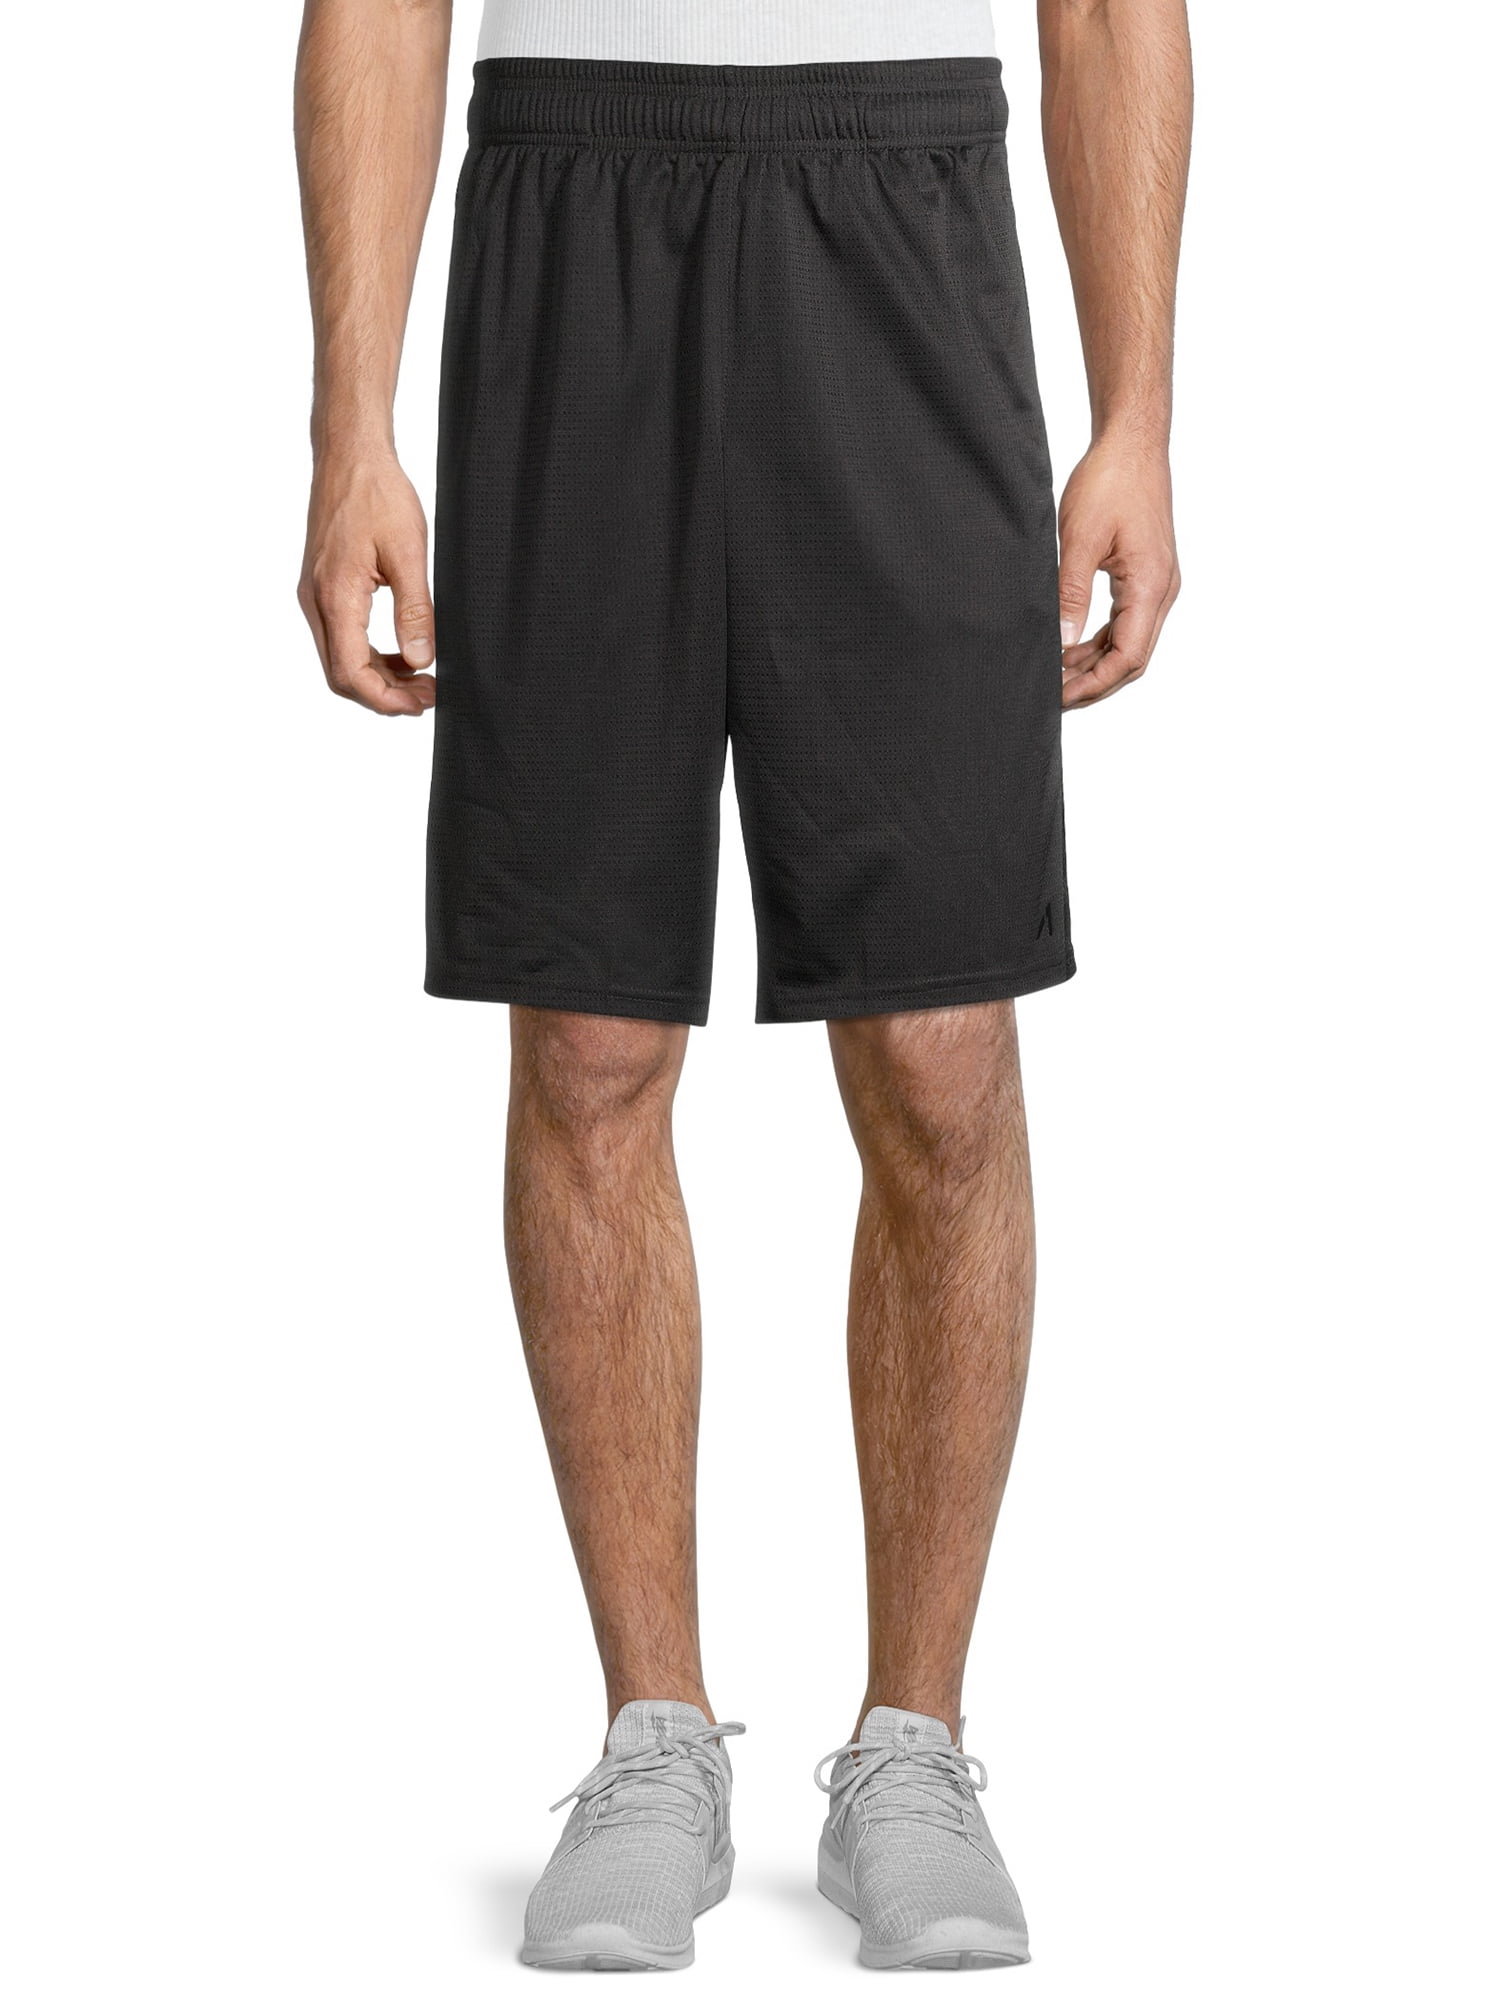 AL1VE Men's Grid Mesh Basketball Shorts - Walmart.com